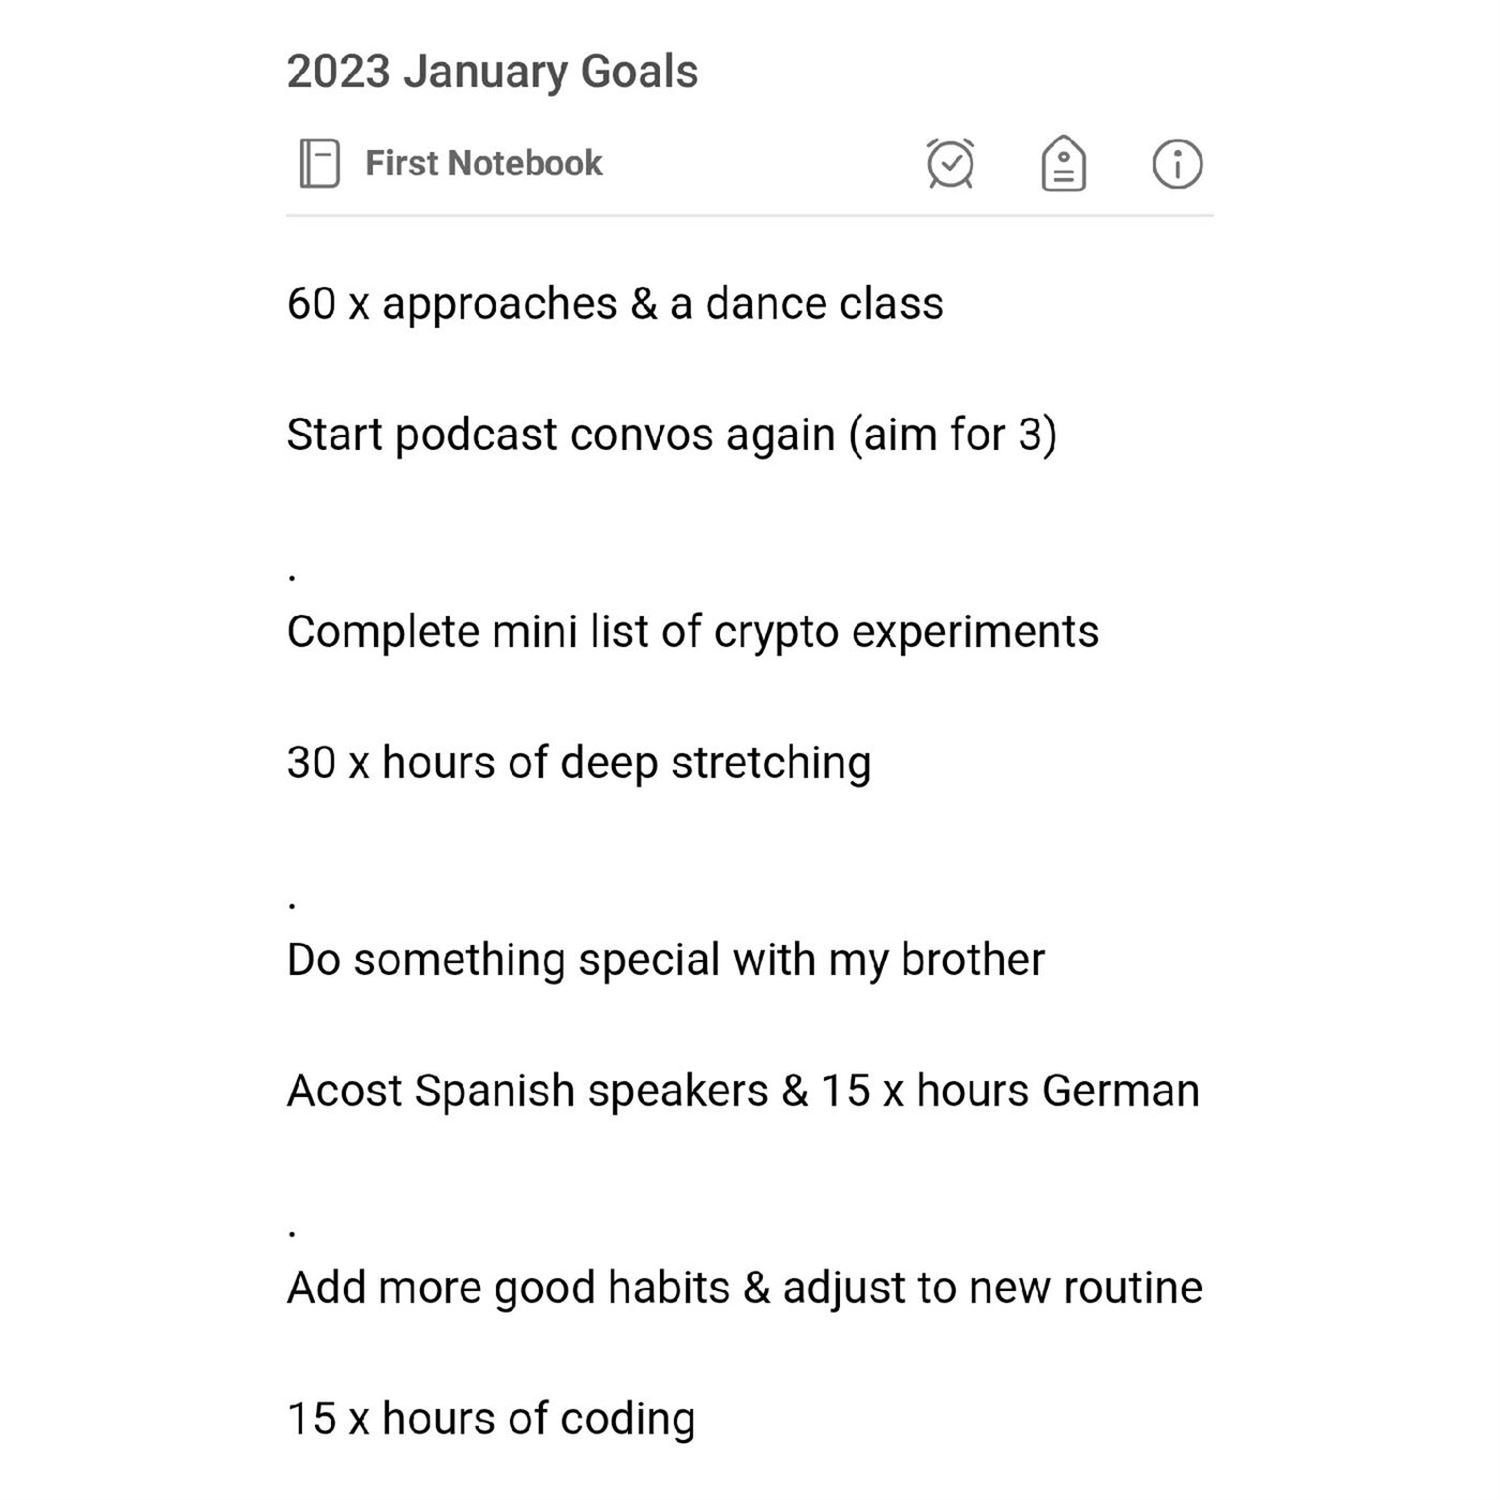 My January 2023 goals